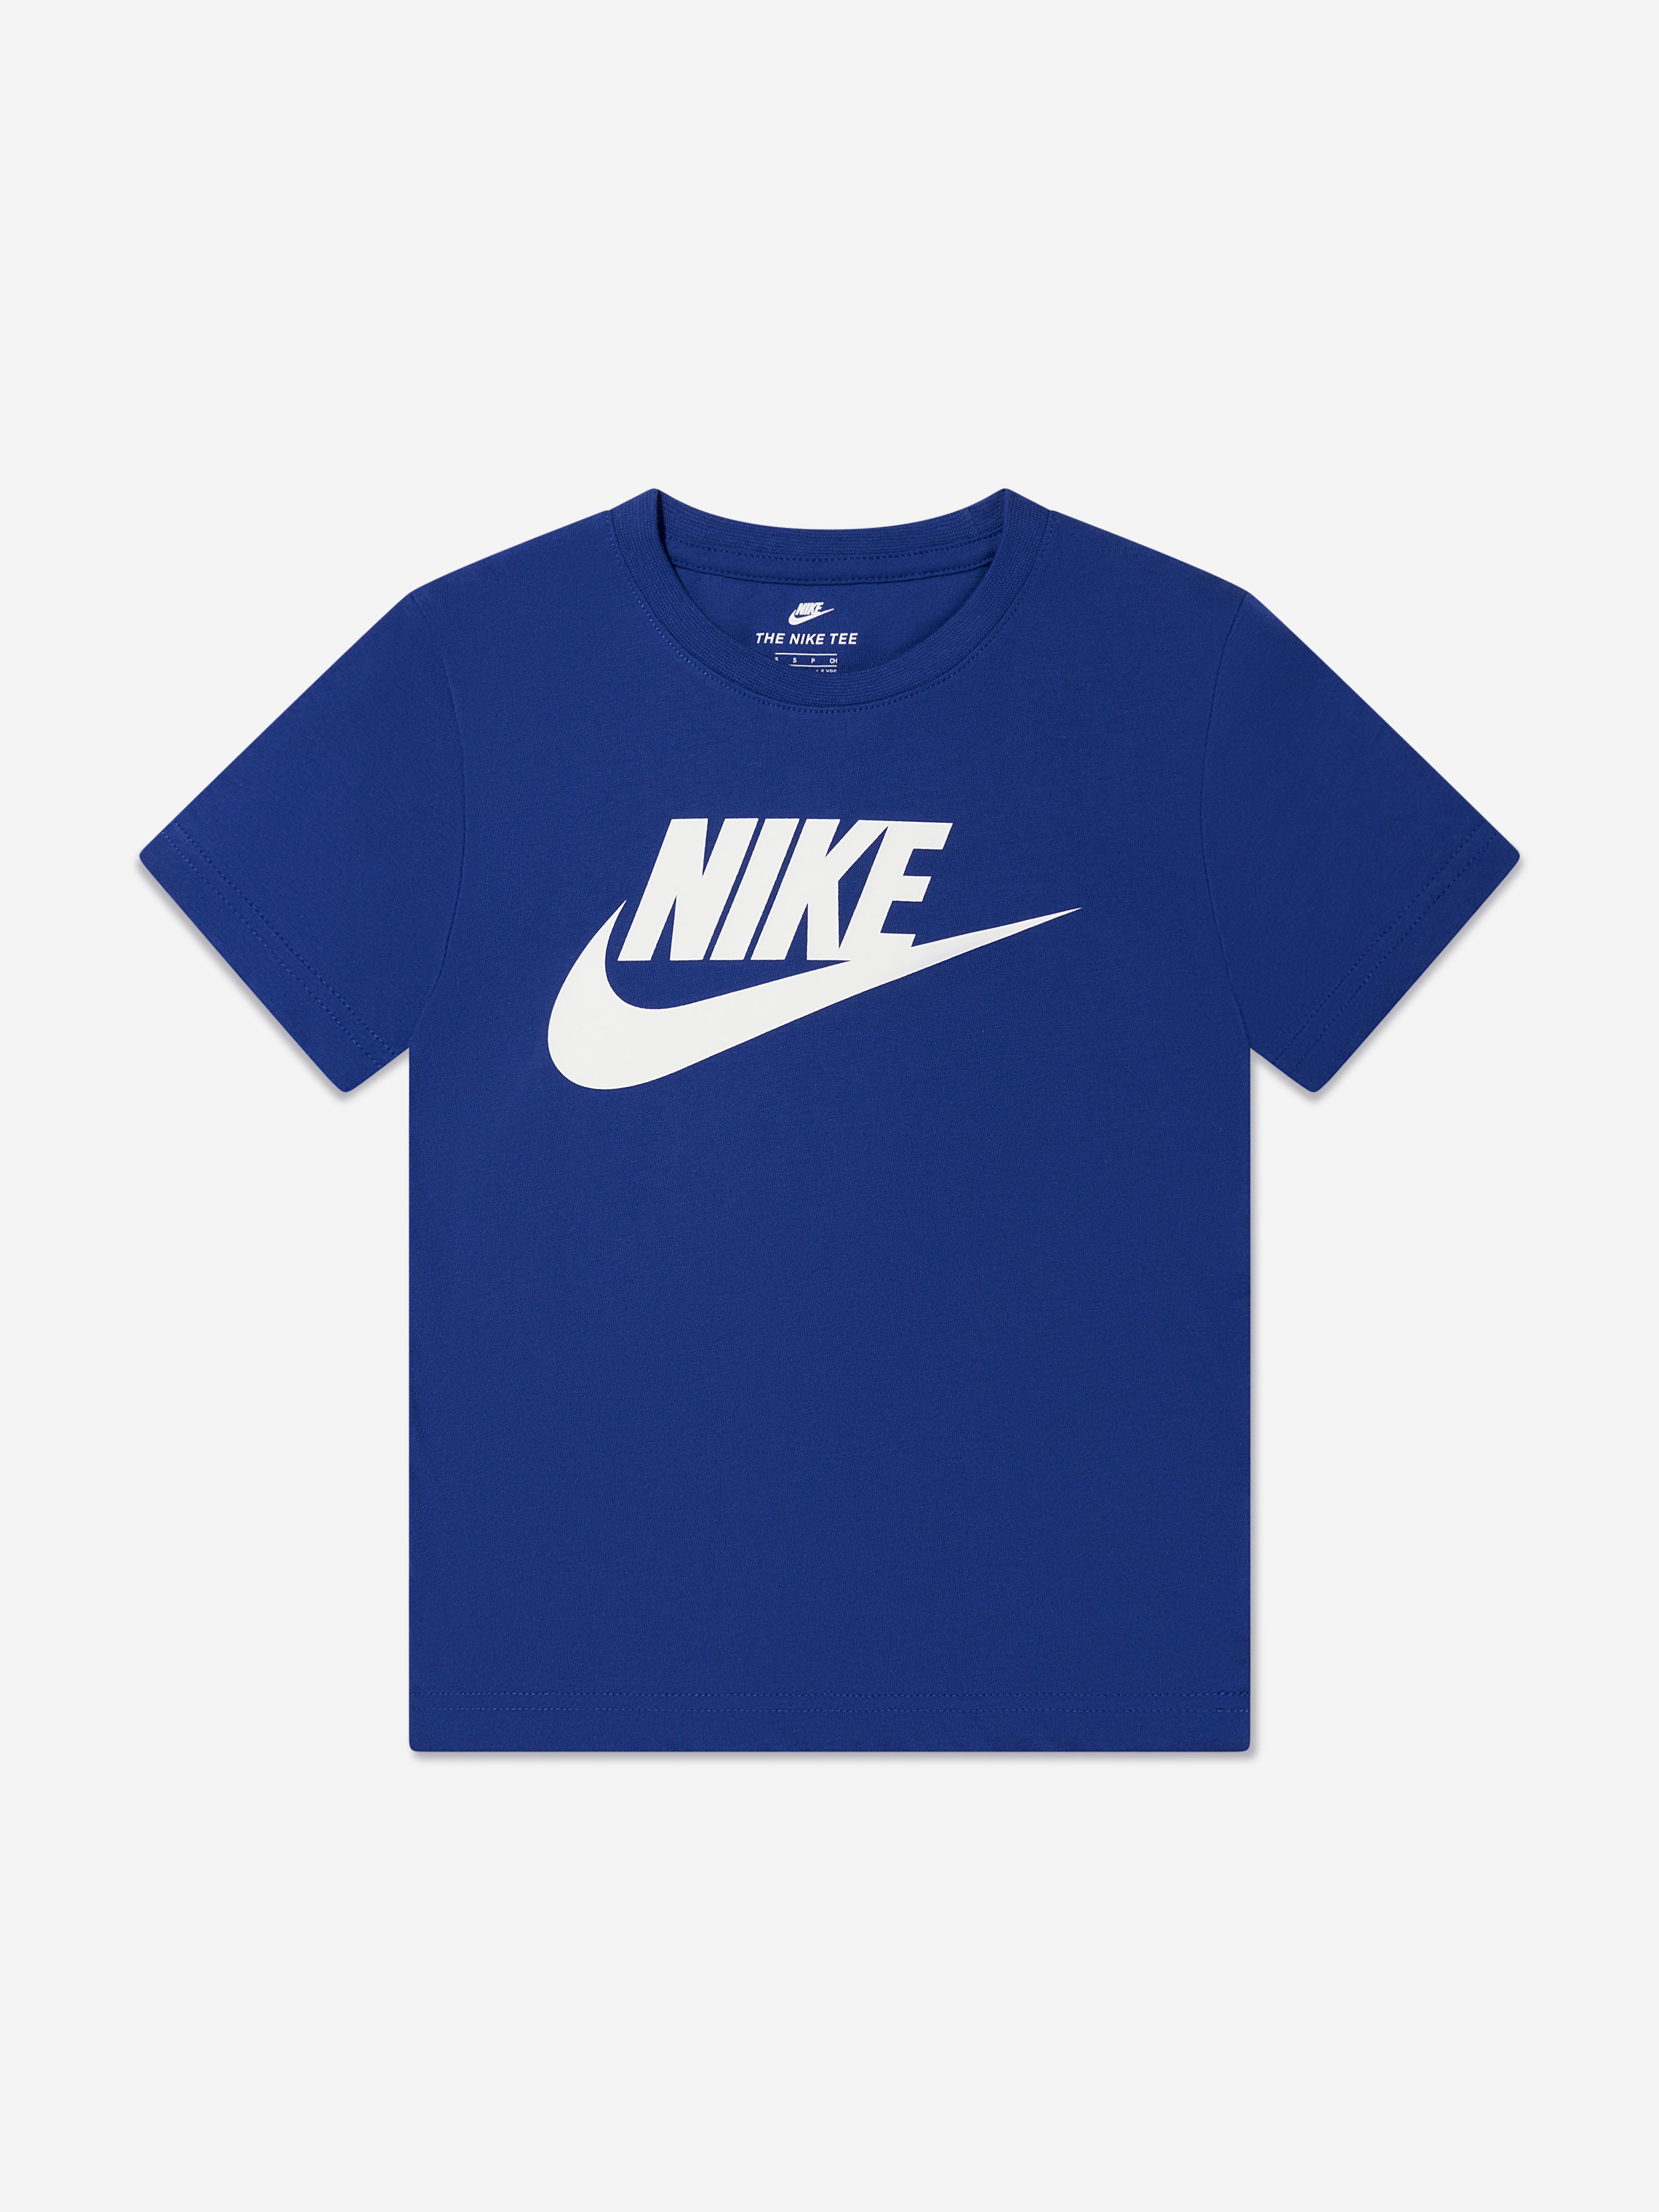 Nike Boys Cotton Jersey Logo Clothing T-Shirt | Childsplay